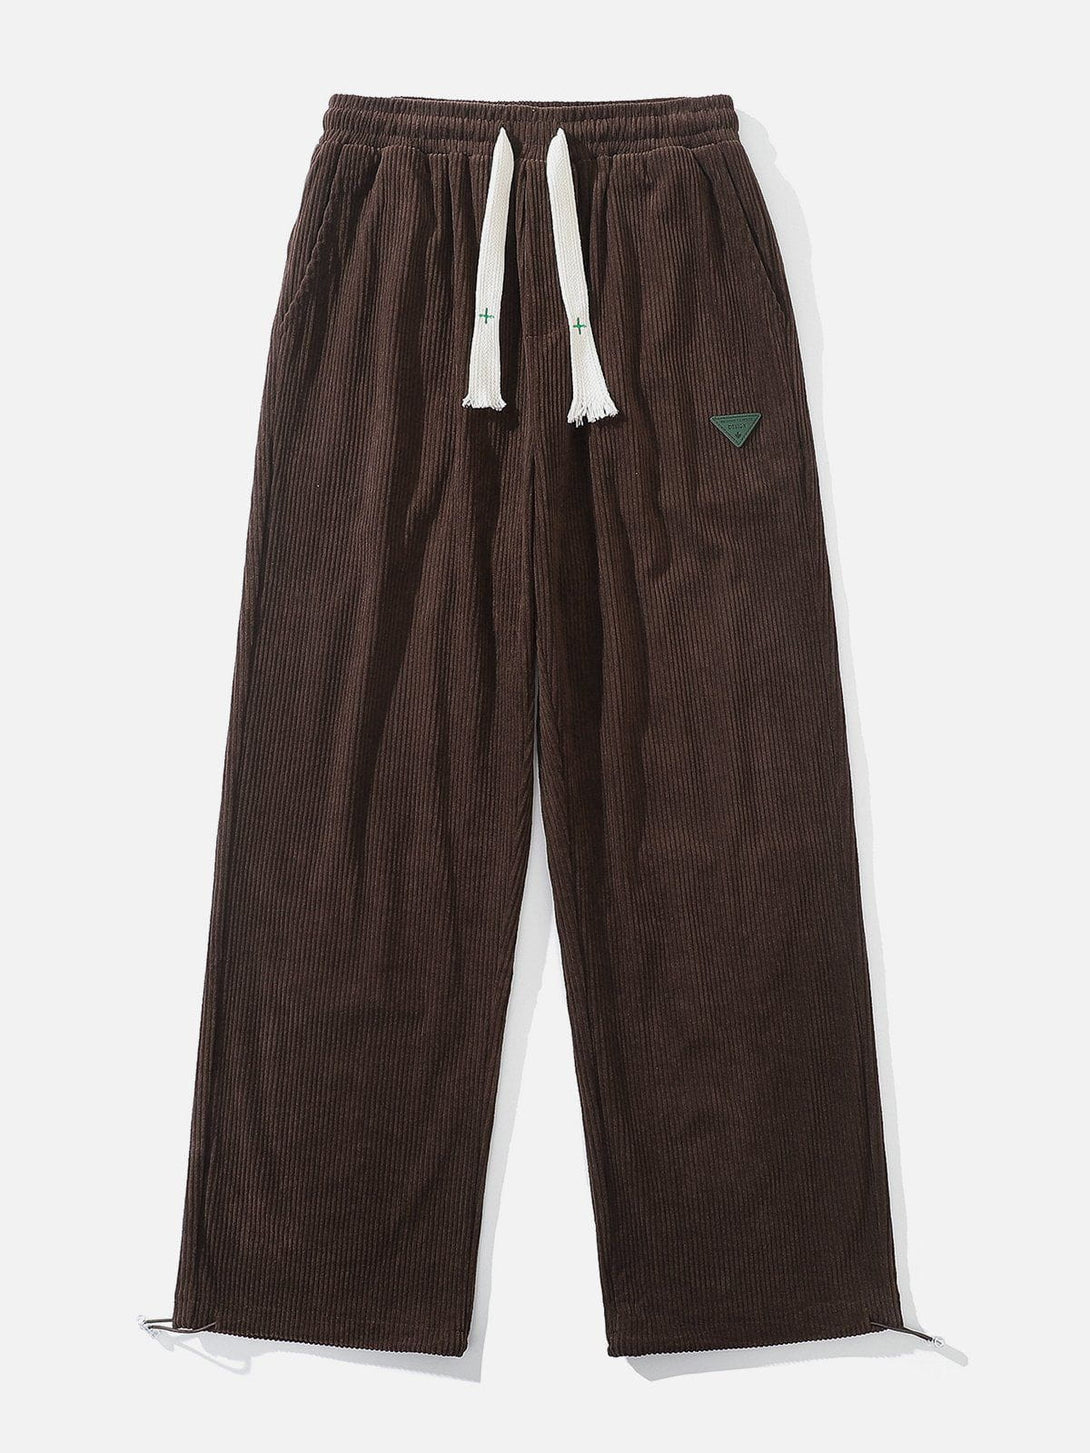 Majesda® - Solid Corduroy Pants outfit ideas streetwear fashion